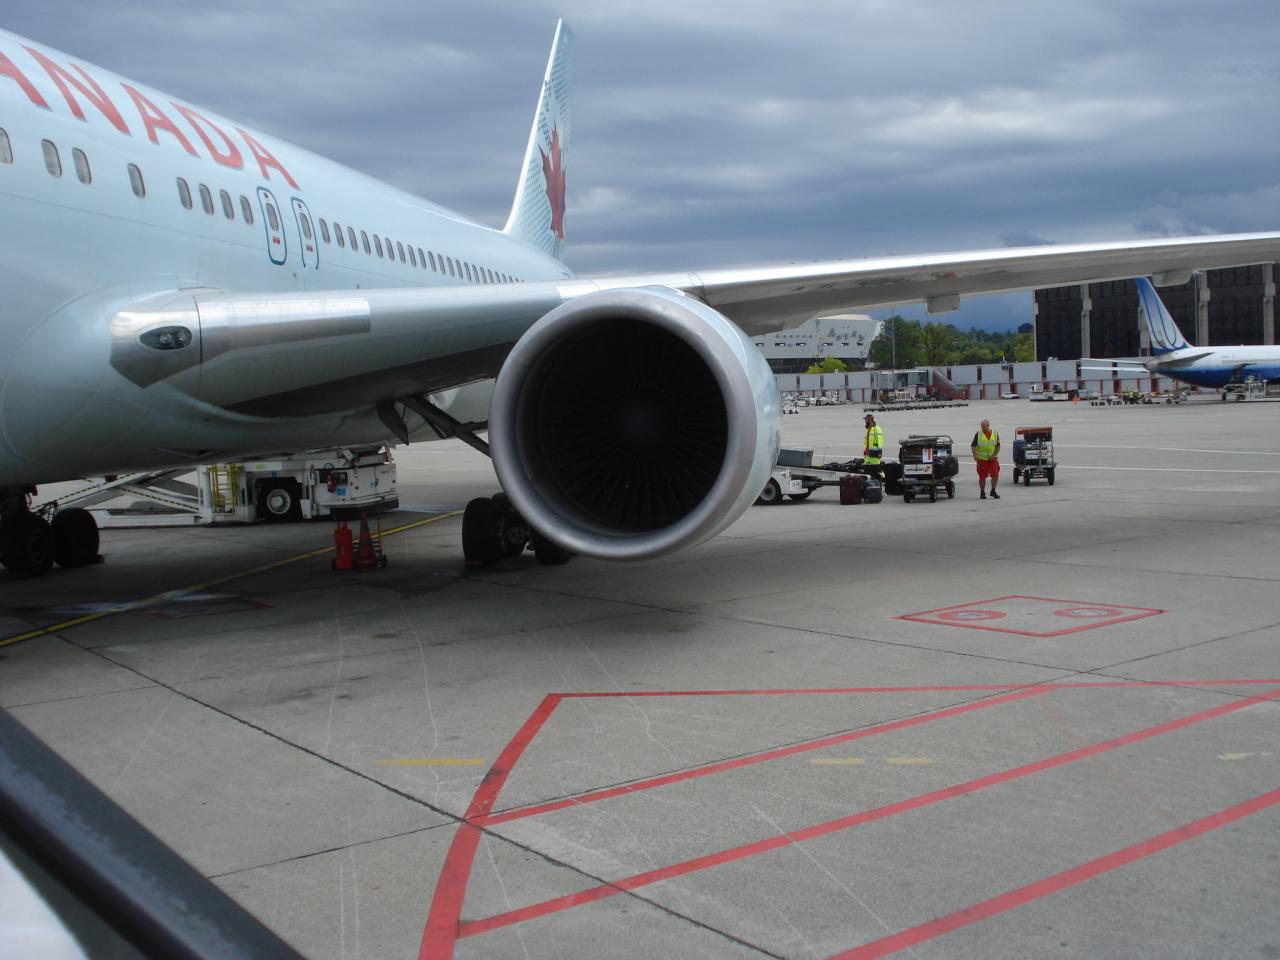 Boeing 767-300 air canada tarmac Genève 3